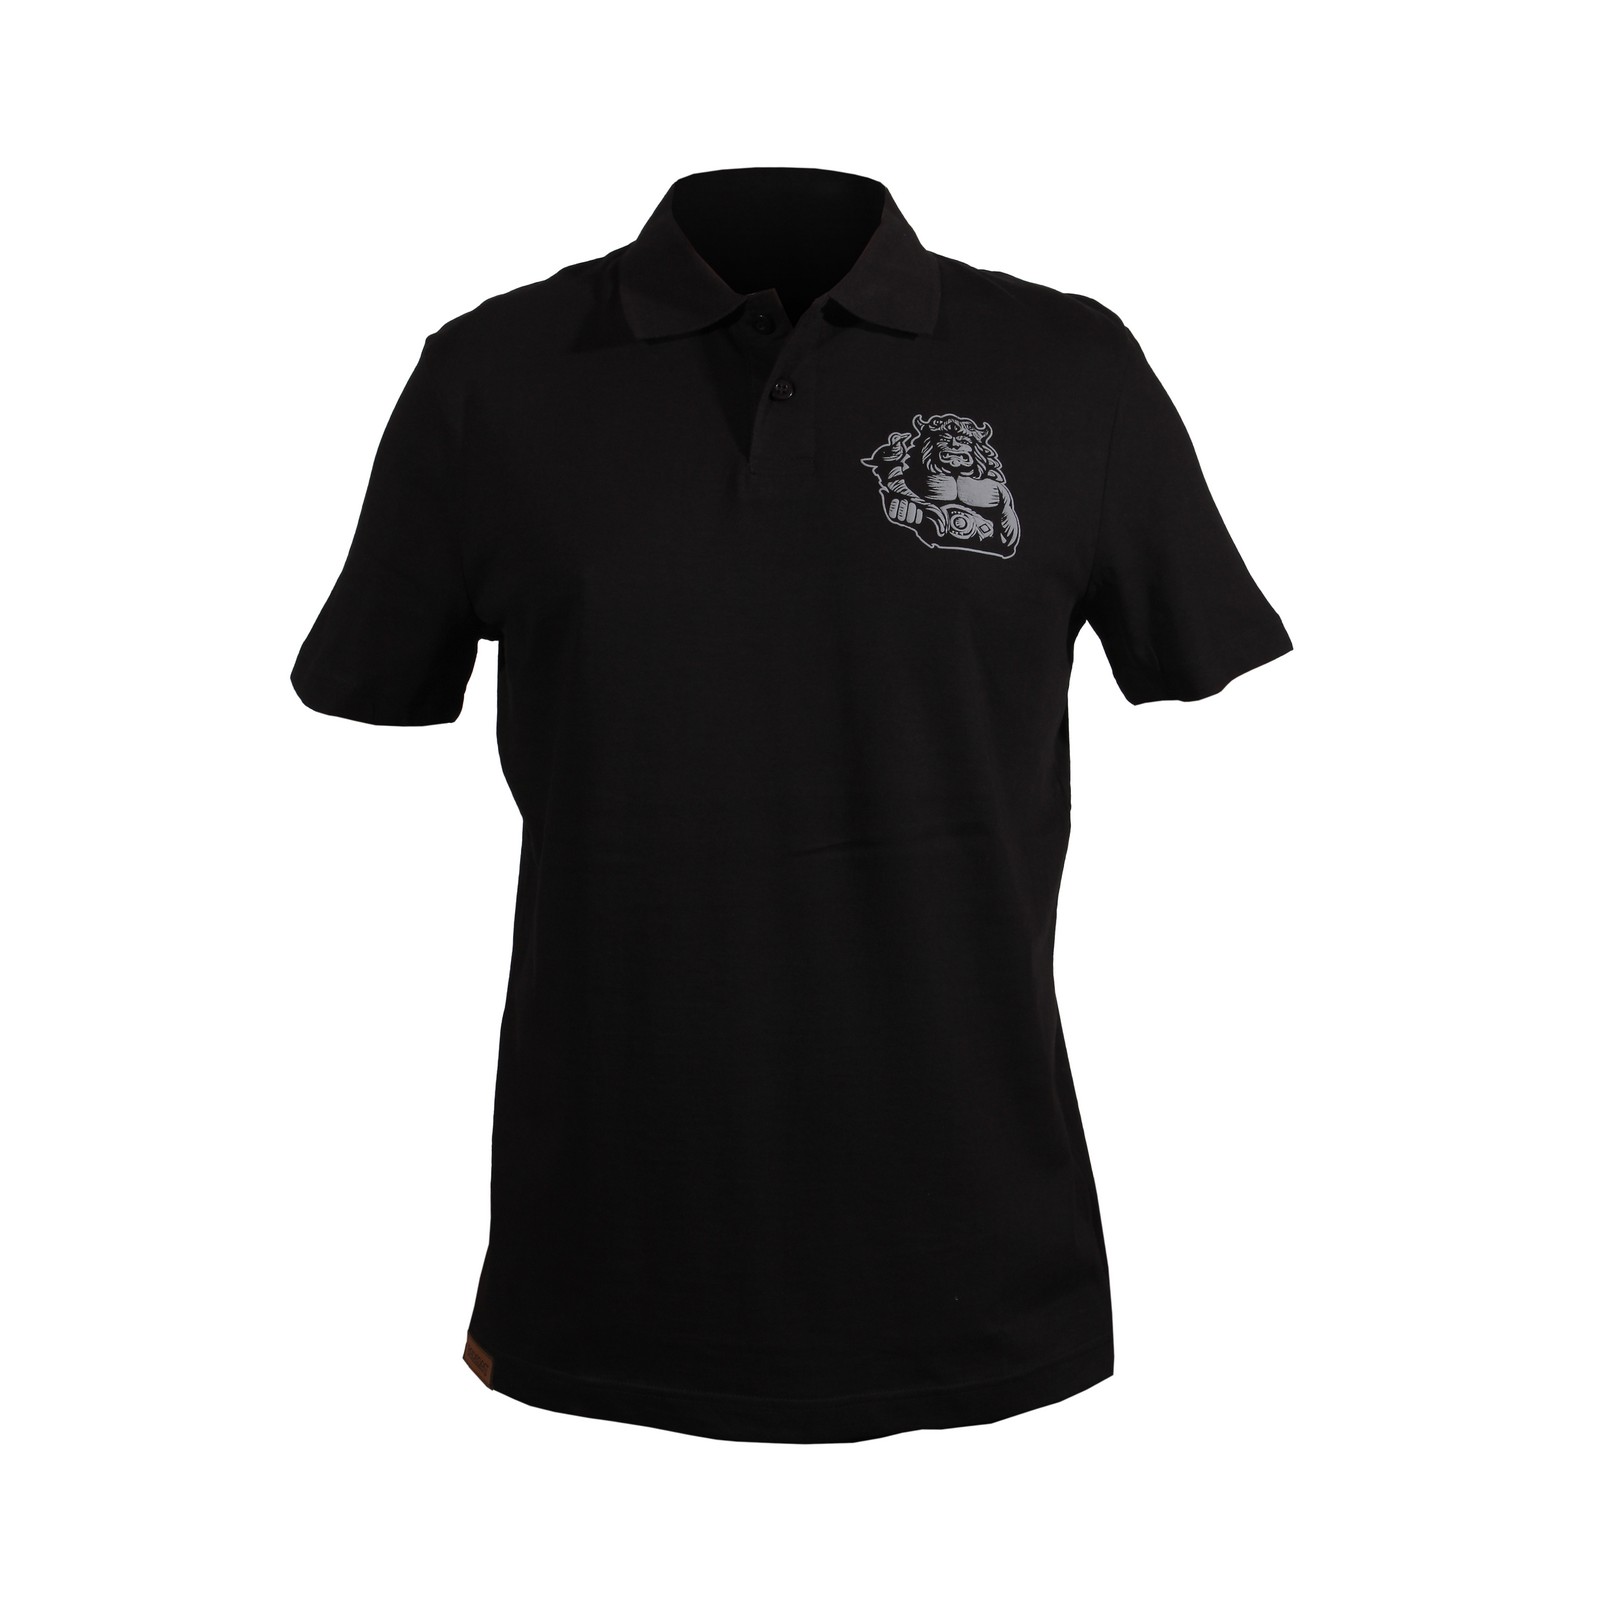 Men's polo shirt Radegast black